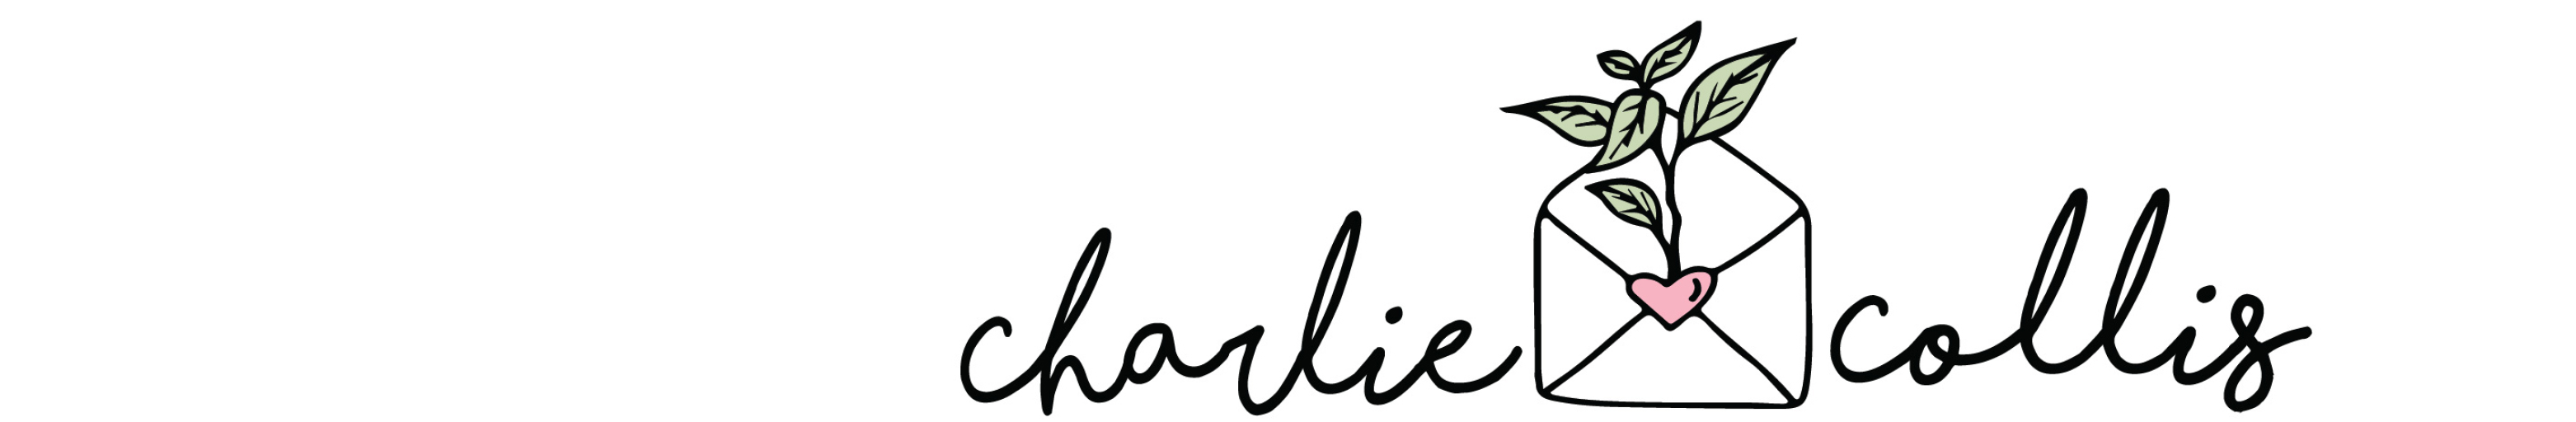 Charlie Colliss profilbanner